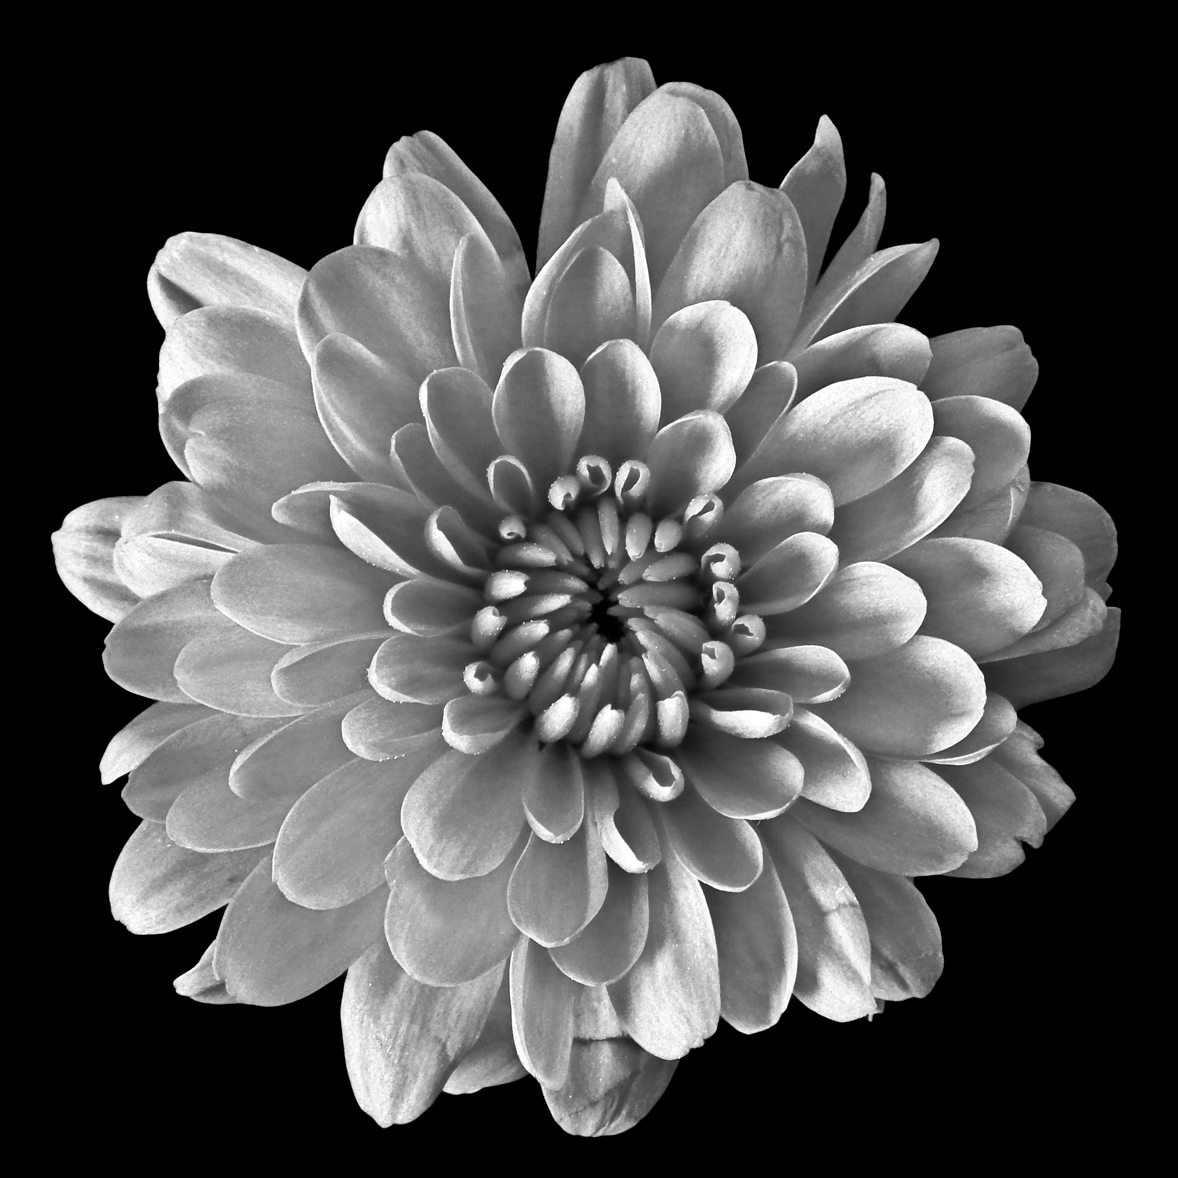 Classic Black and White Flowers | Art Photo Web Studio